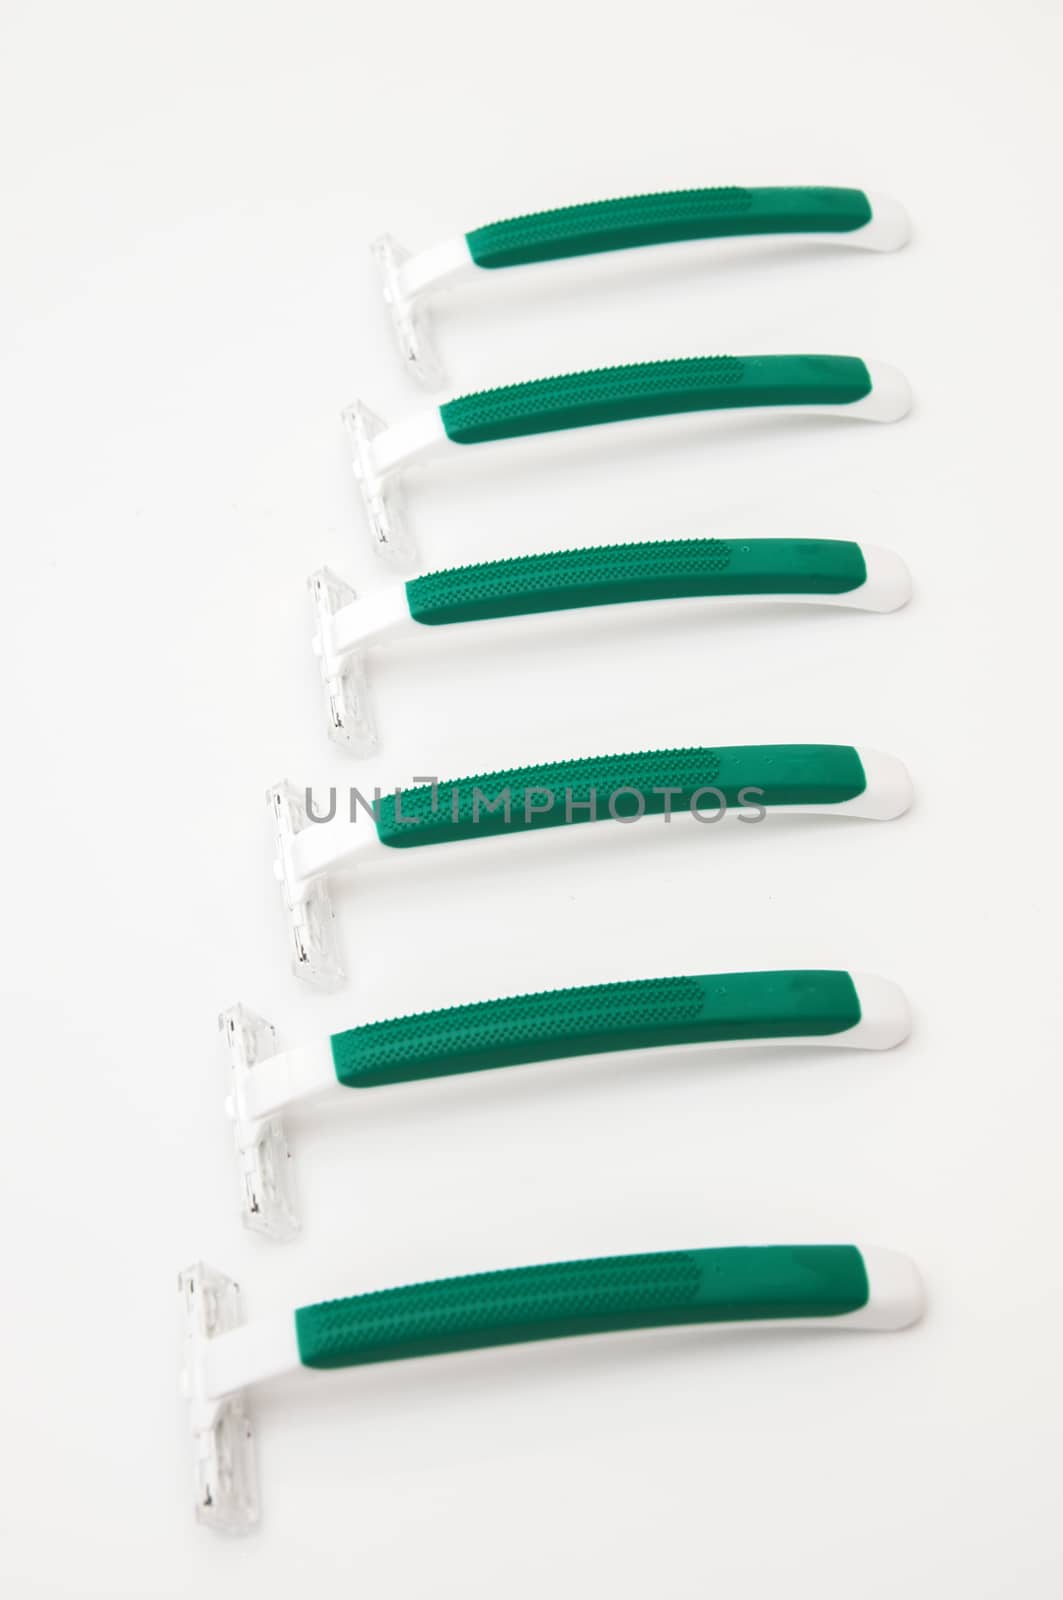 green razors on a white background